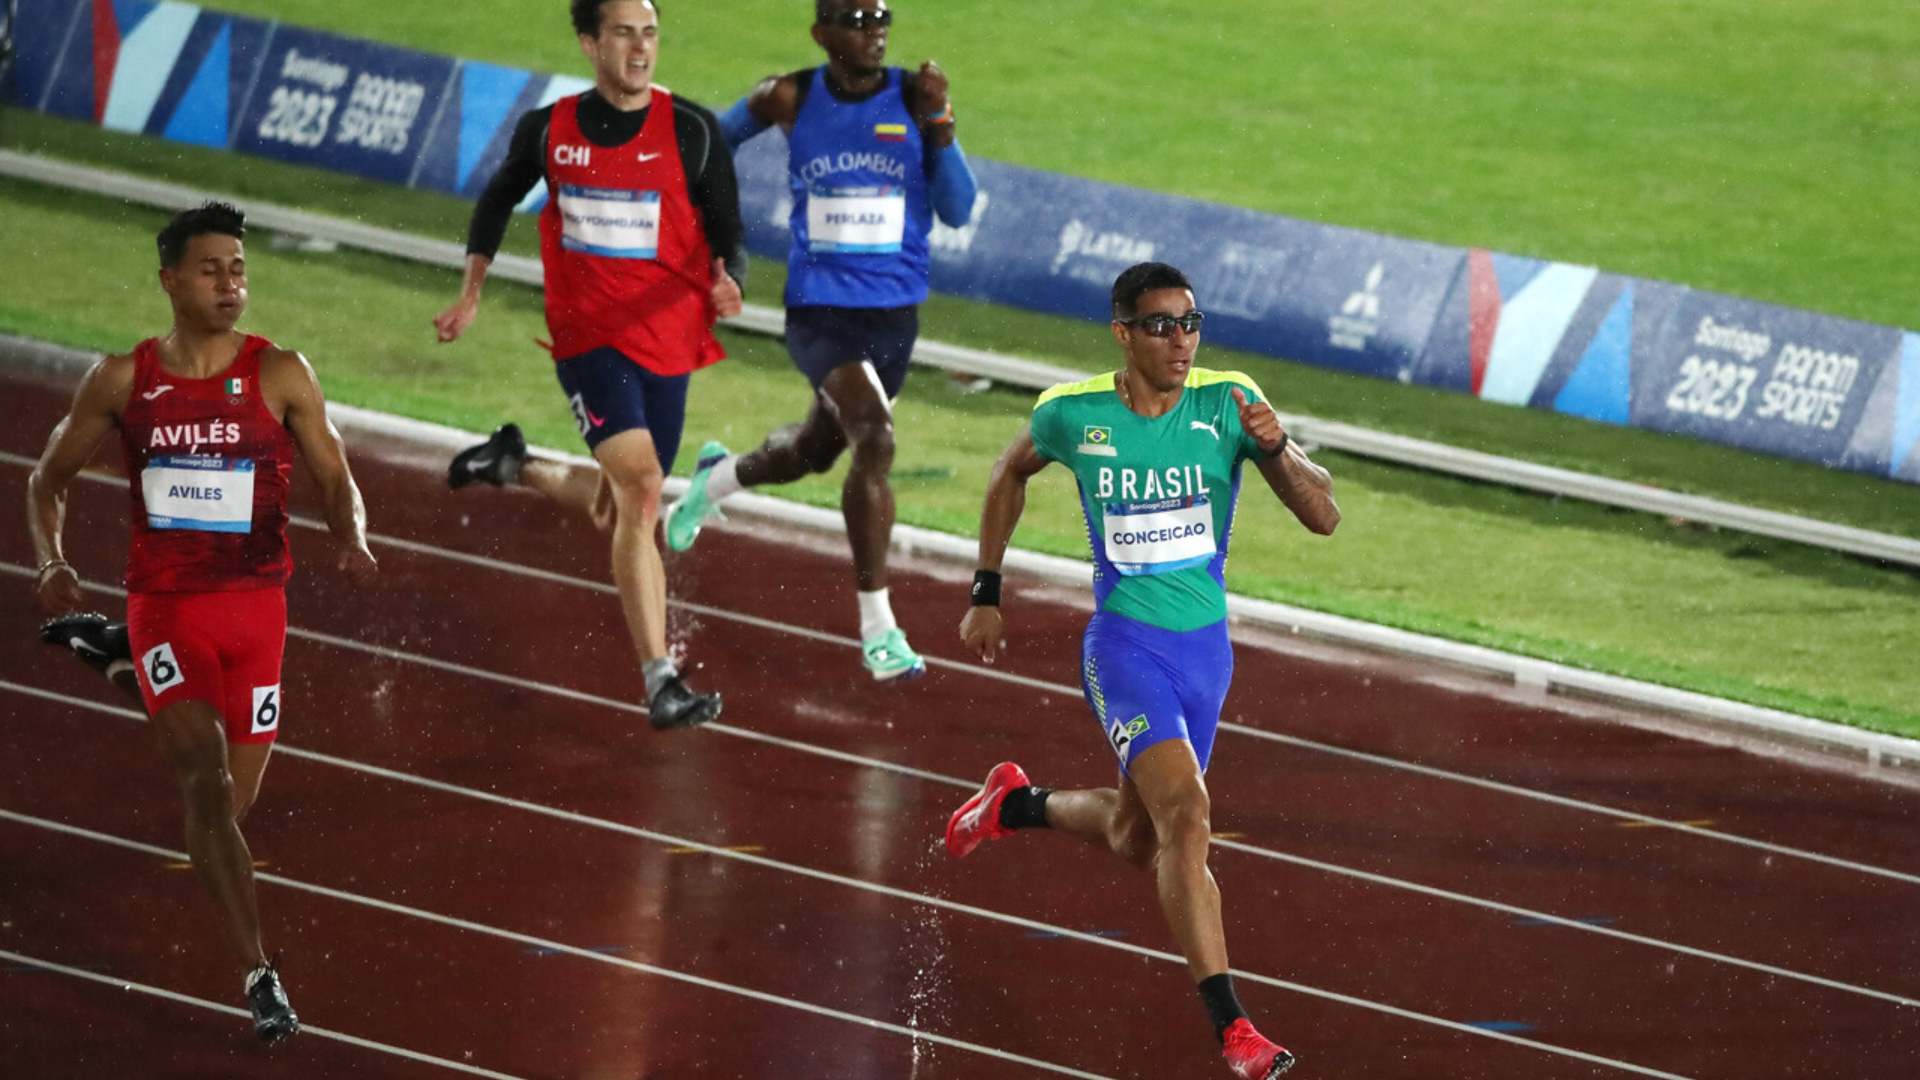 Brazilian Lucas Conceição achieves gold in the 400 meters final